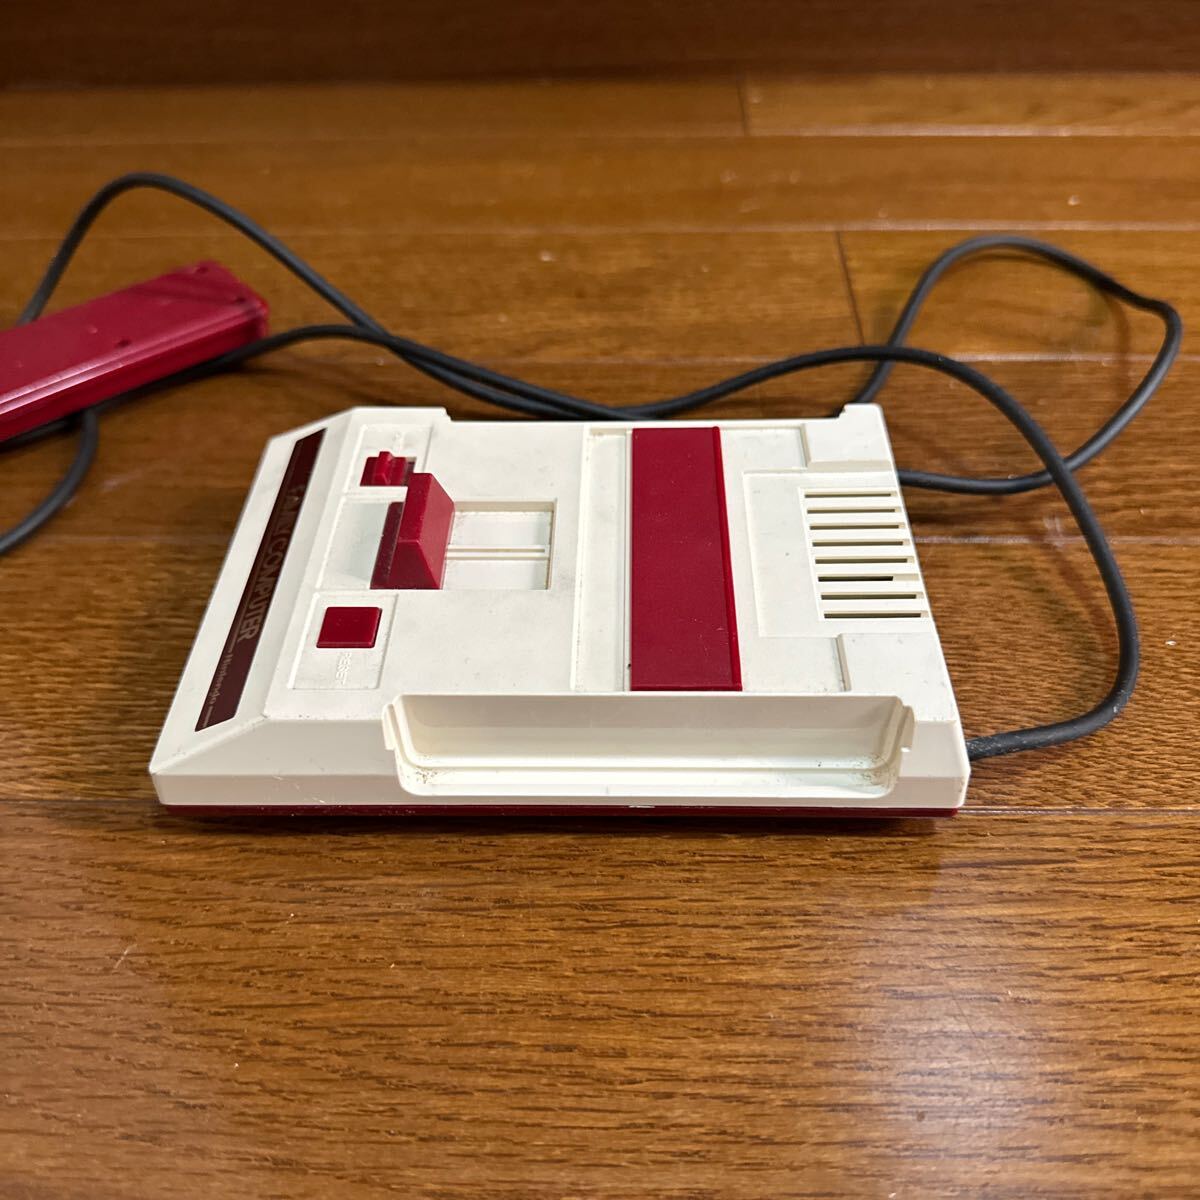  operation verification ending Nintendo Classic Mini Family computer Famicom nintendo NINTENDO CLV-101 body only 